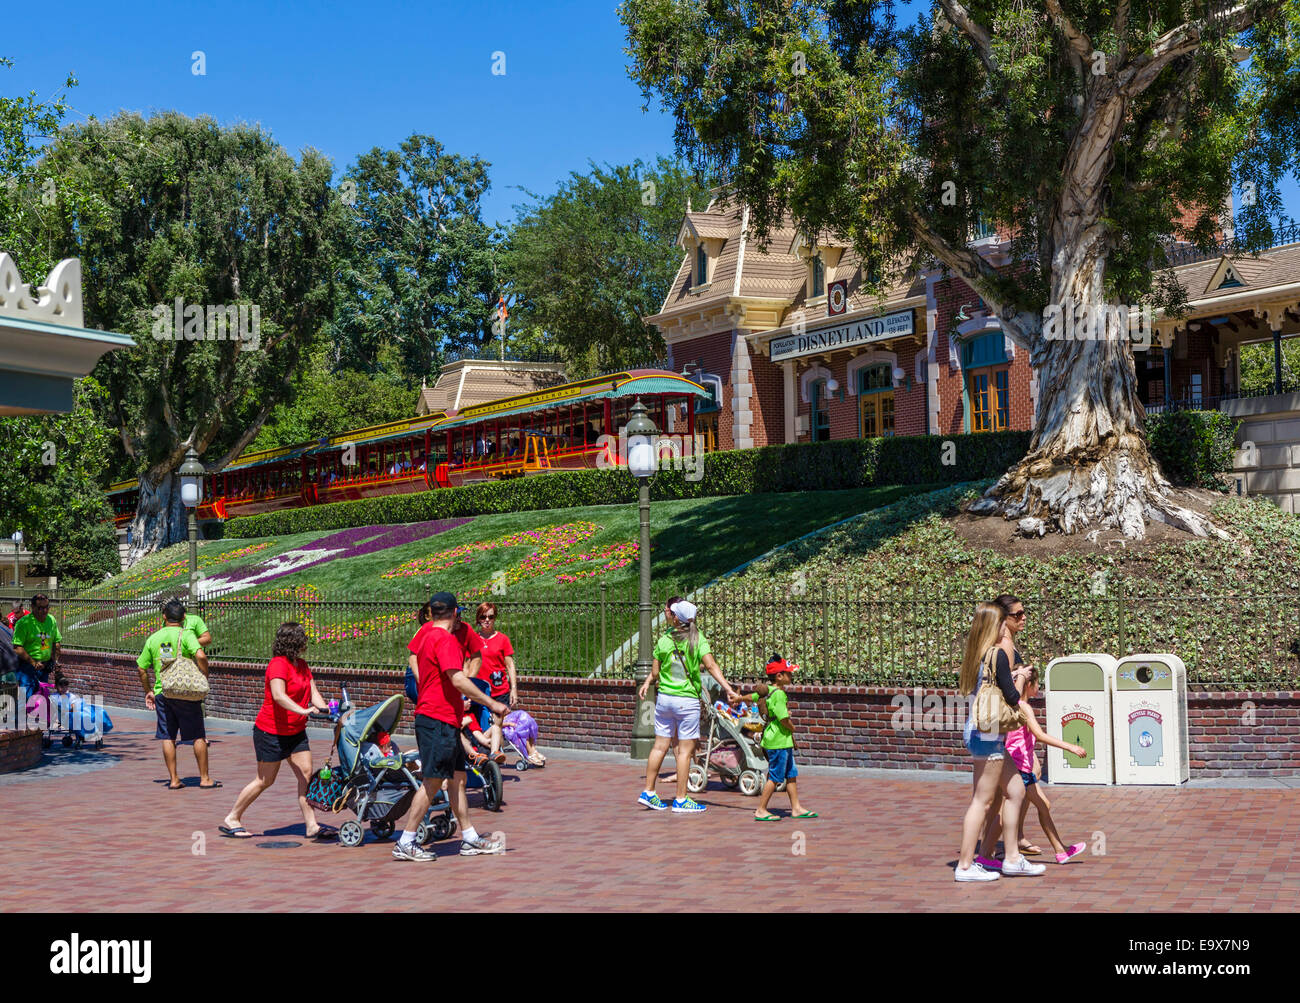 Disneyland Railroad at the entrance to Disneyland Resort, Anaheim, Orange County, near Los Angeles, California, USA Stock Photo